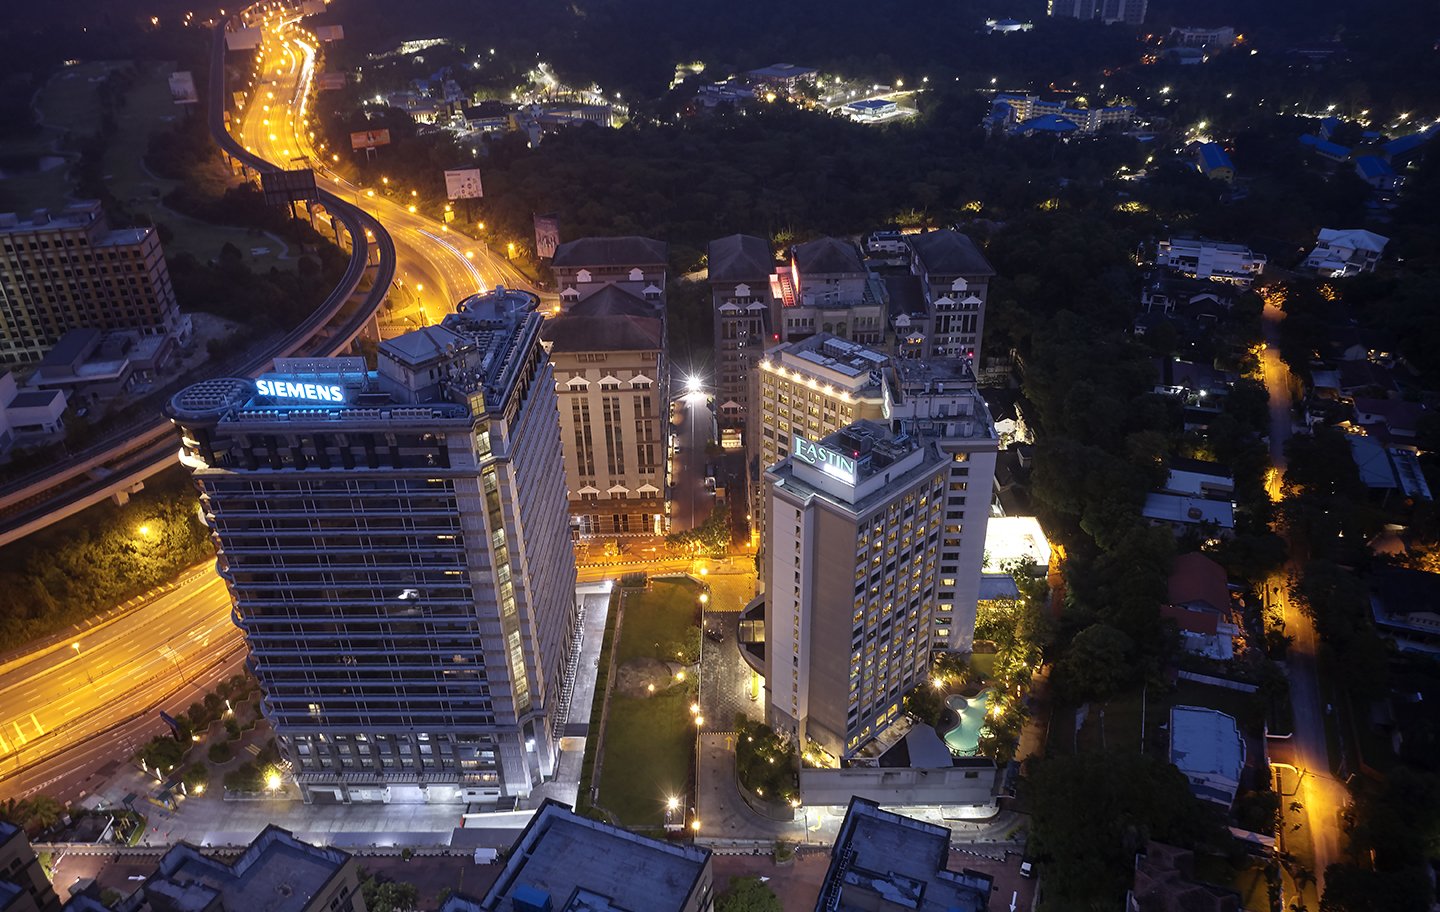 Eastin Hotel Kuala Lumpur - Aerial View (Night) 3.jpg